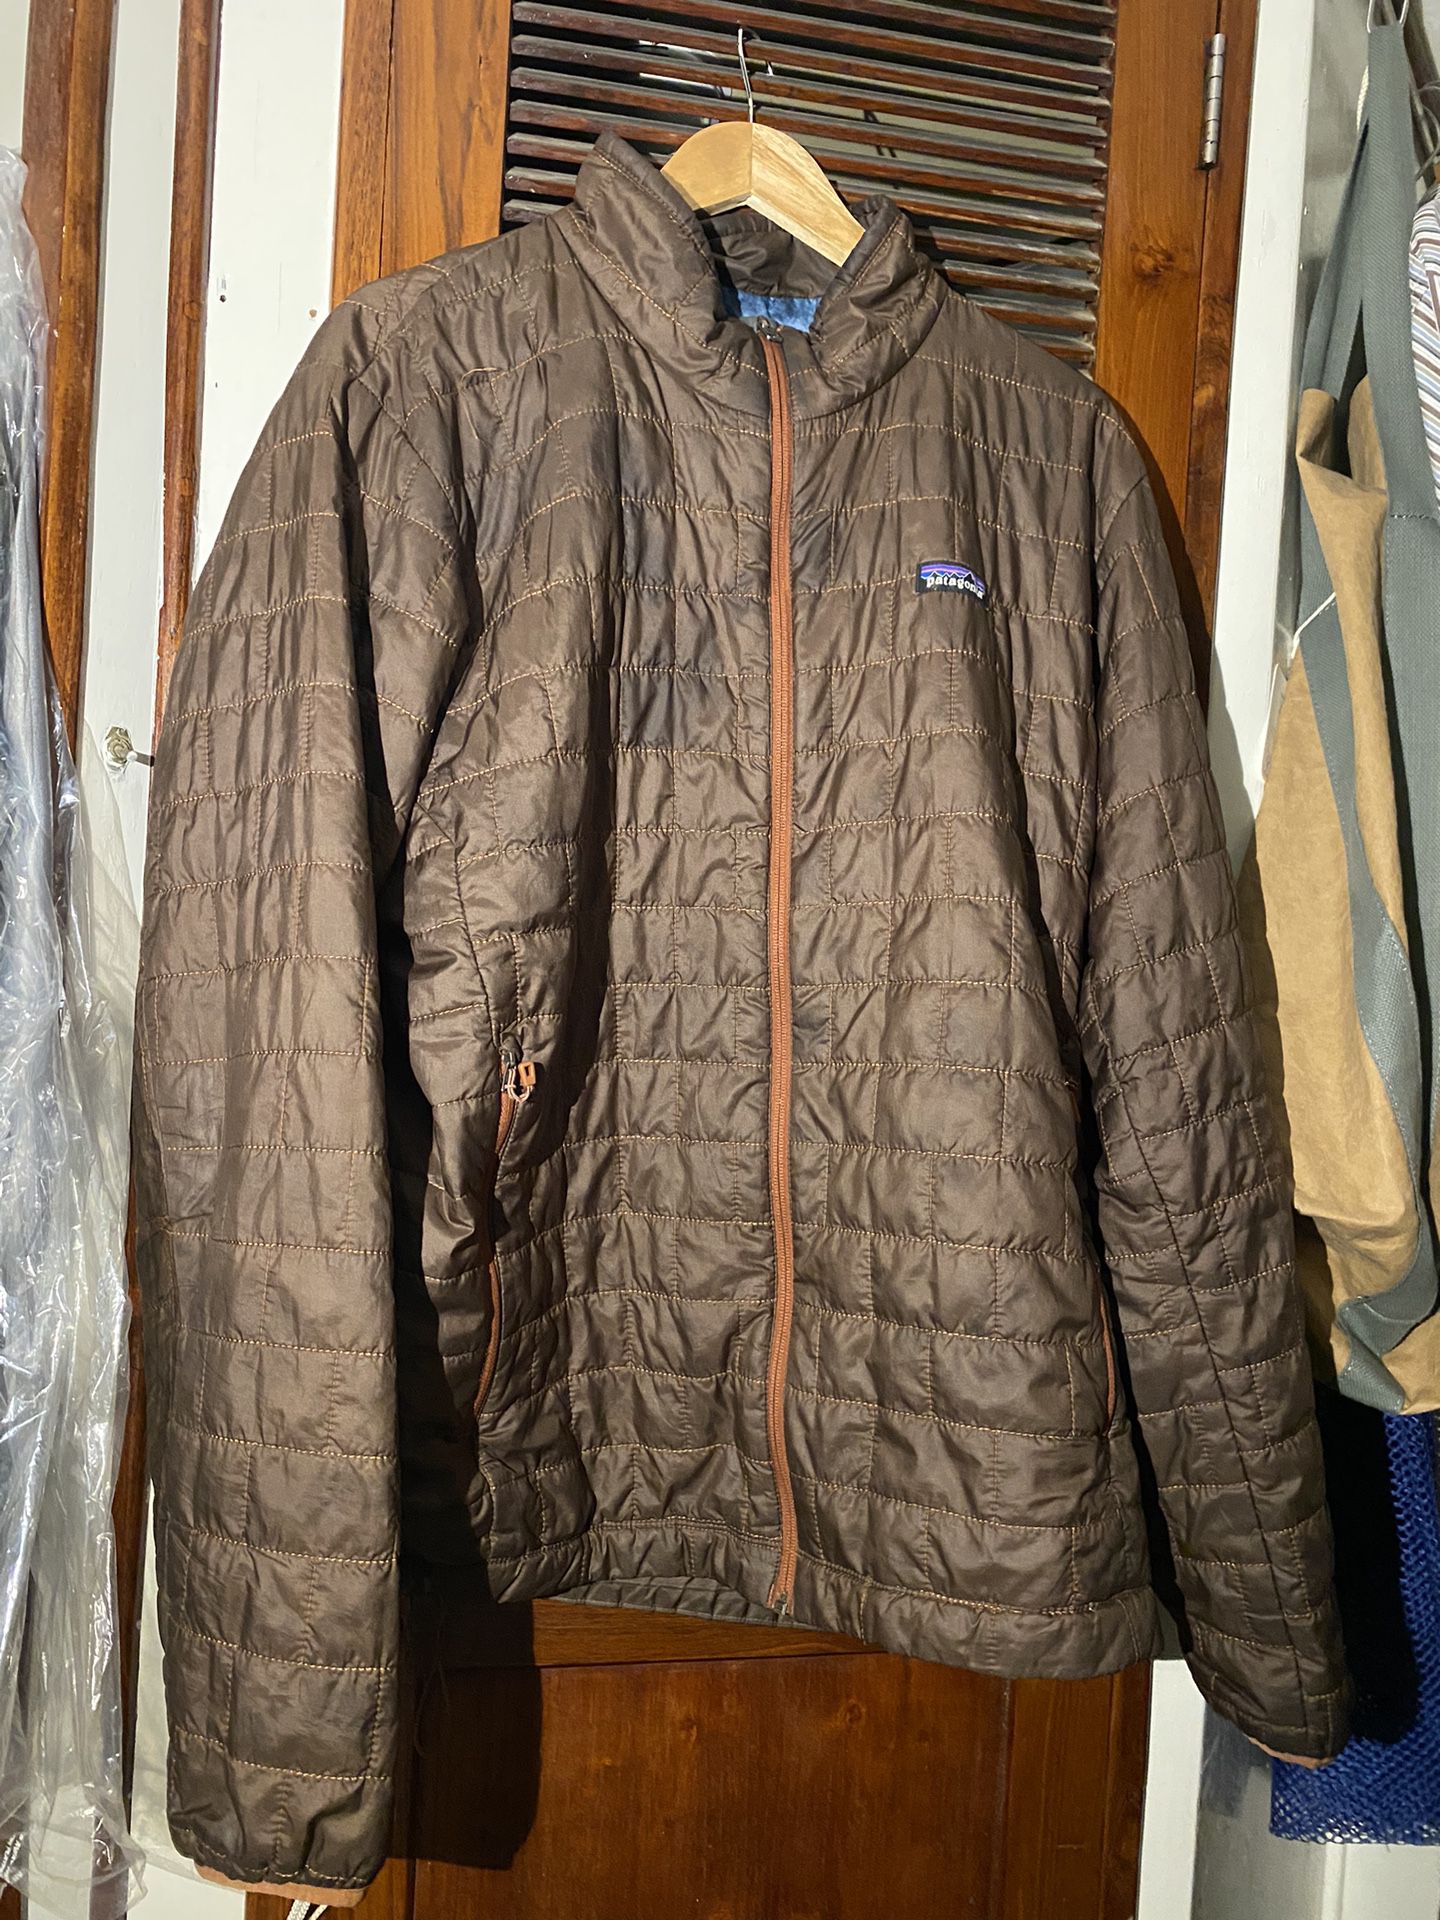 Patagonia men’s XL brown, with inner tie dye nano puffer jacket